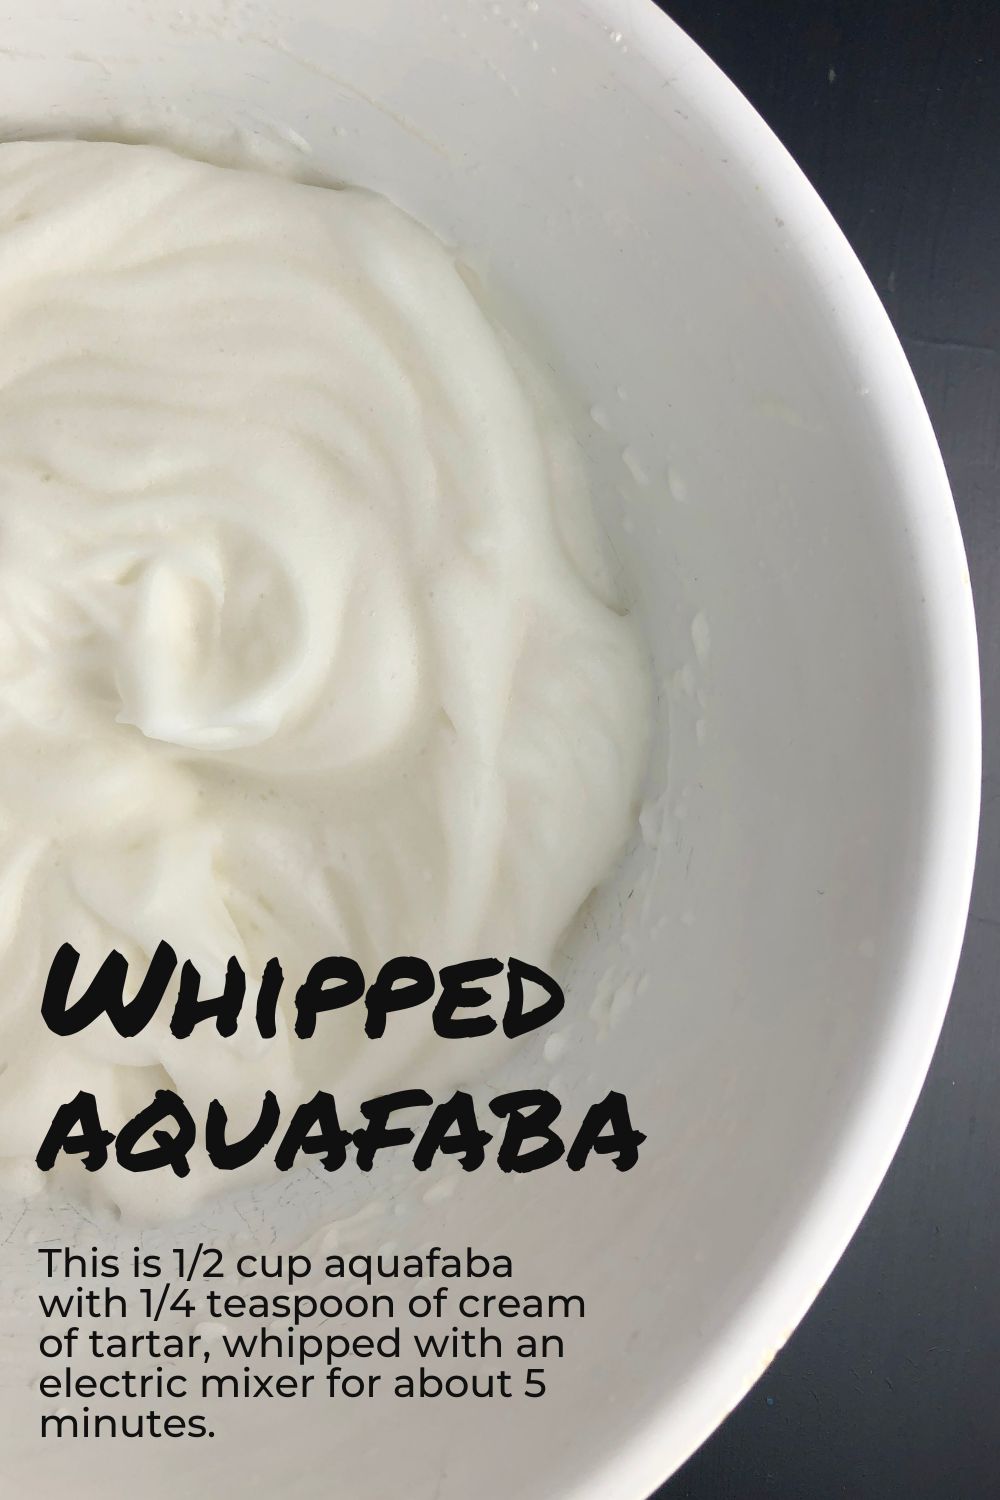 Whipped Aquafaba. When whipped with cream of tartar, aquafaba beats up like egg whites